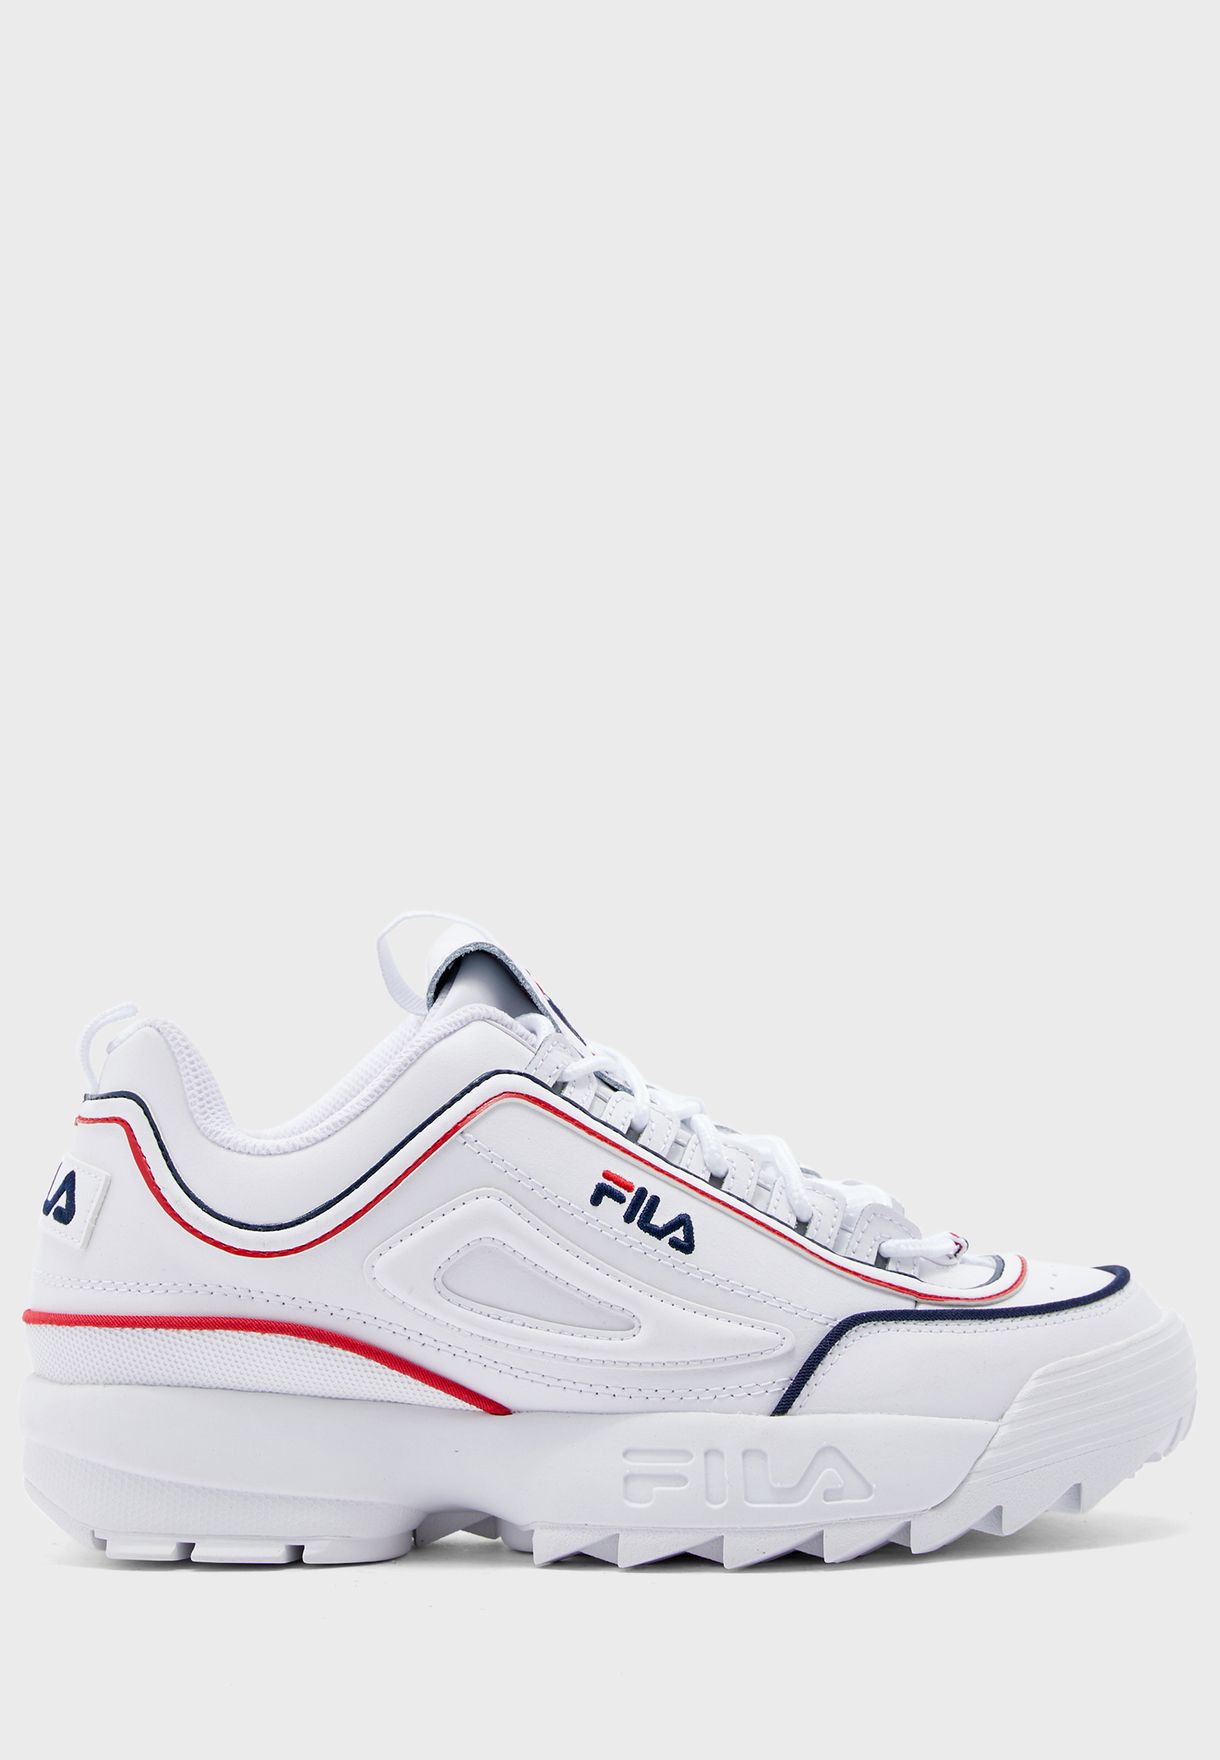 price of fila white shoes